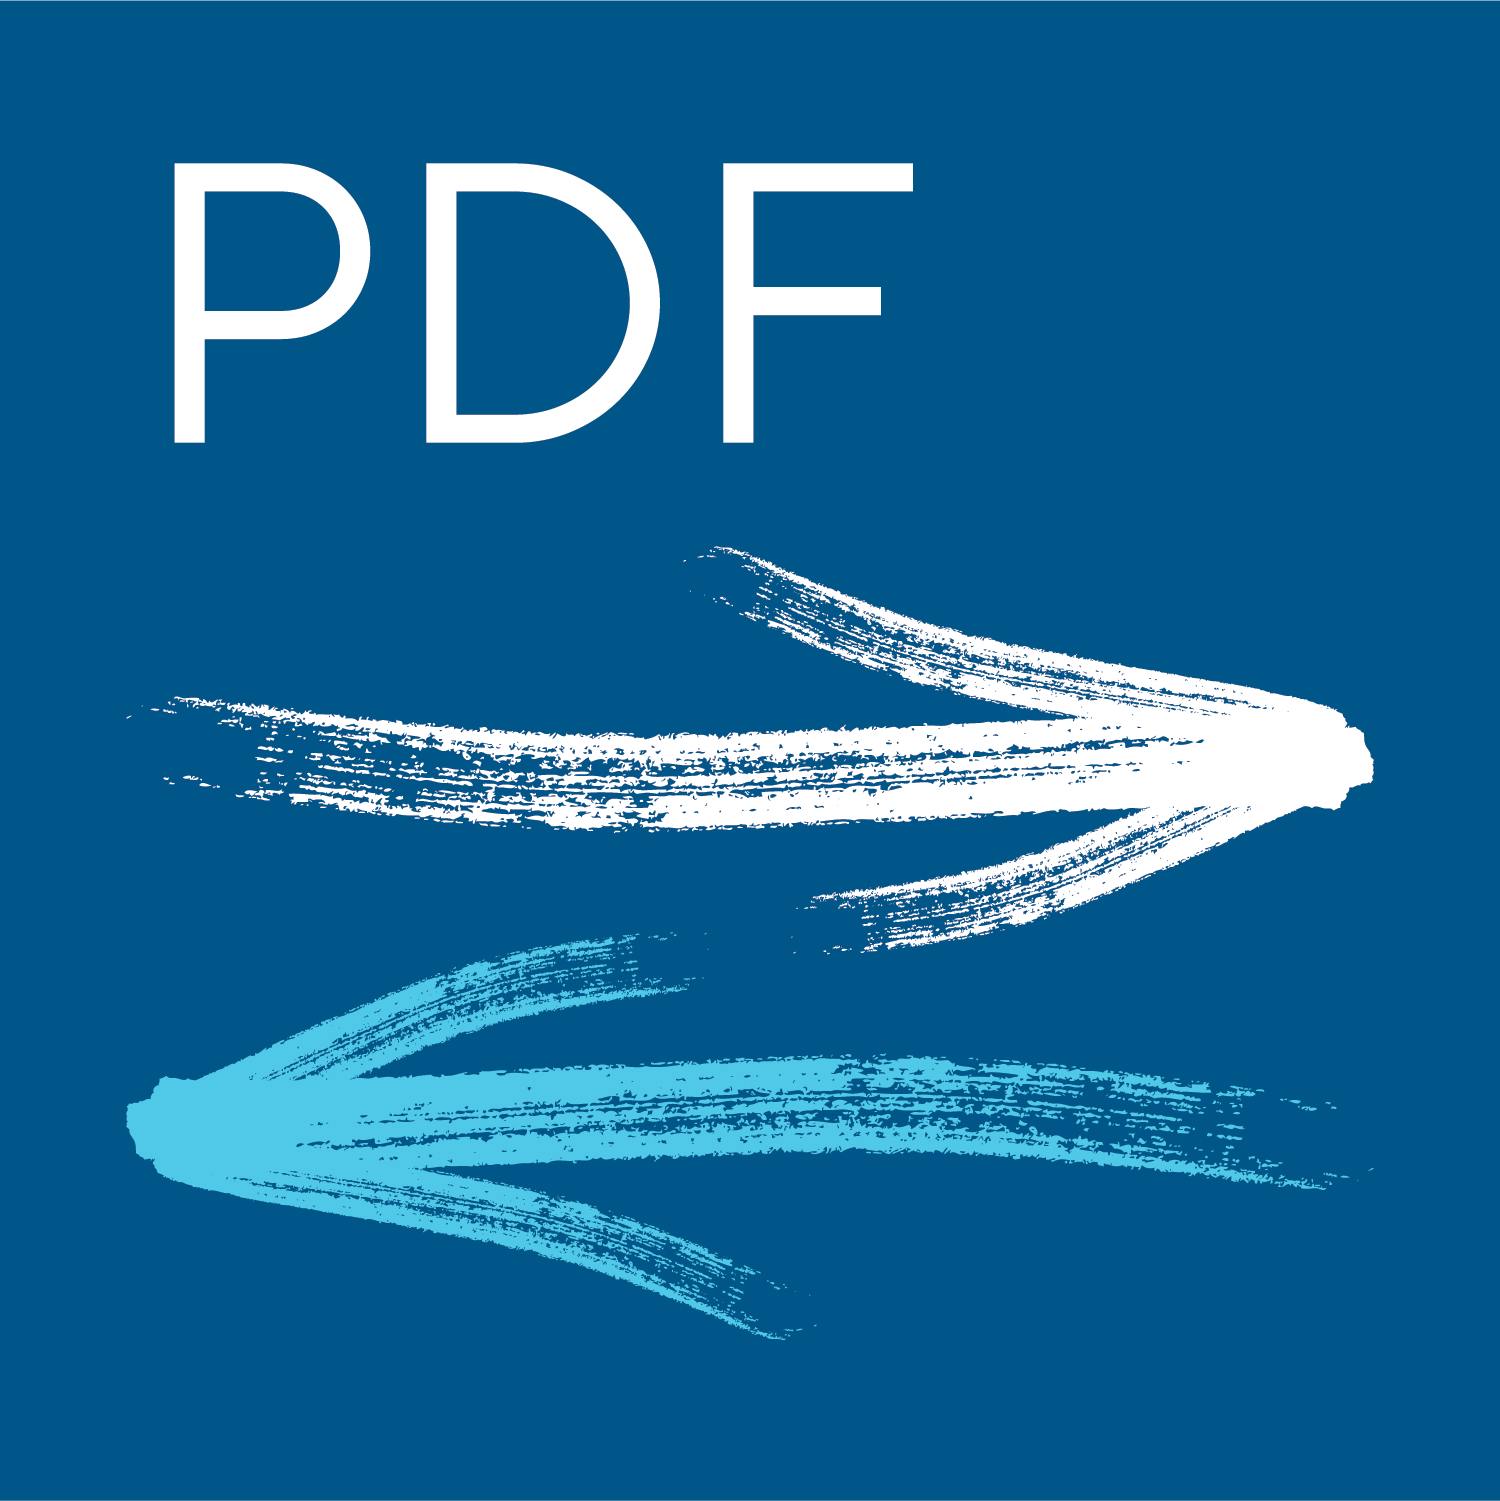 ABBYY FineReader PDF Software - 2023 Reviews, Pricing & Demo